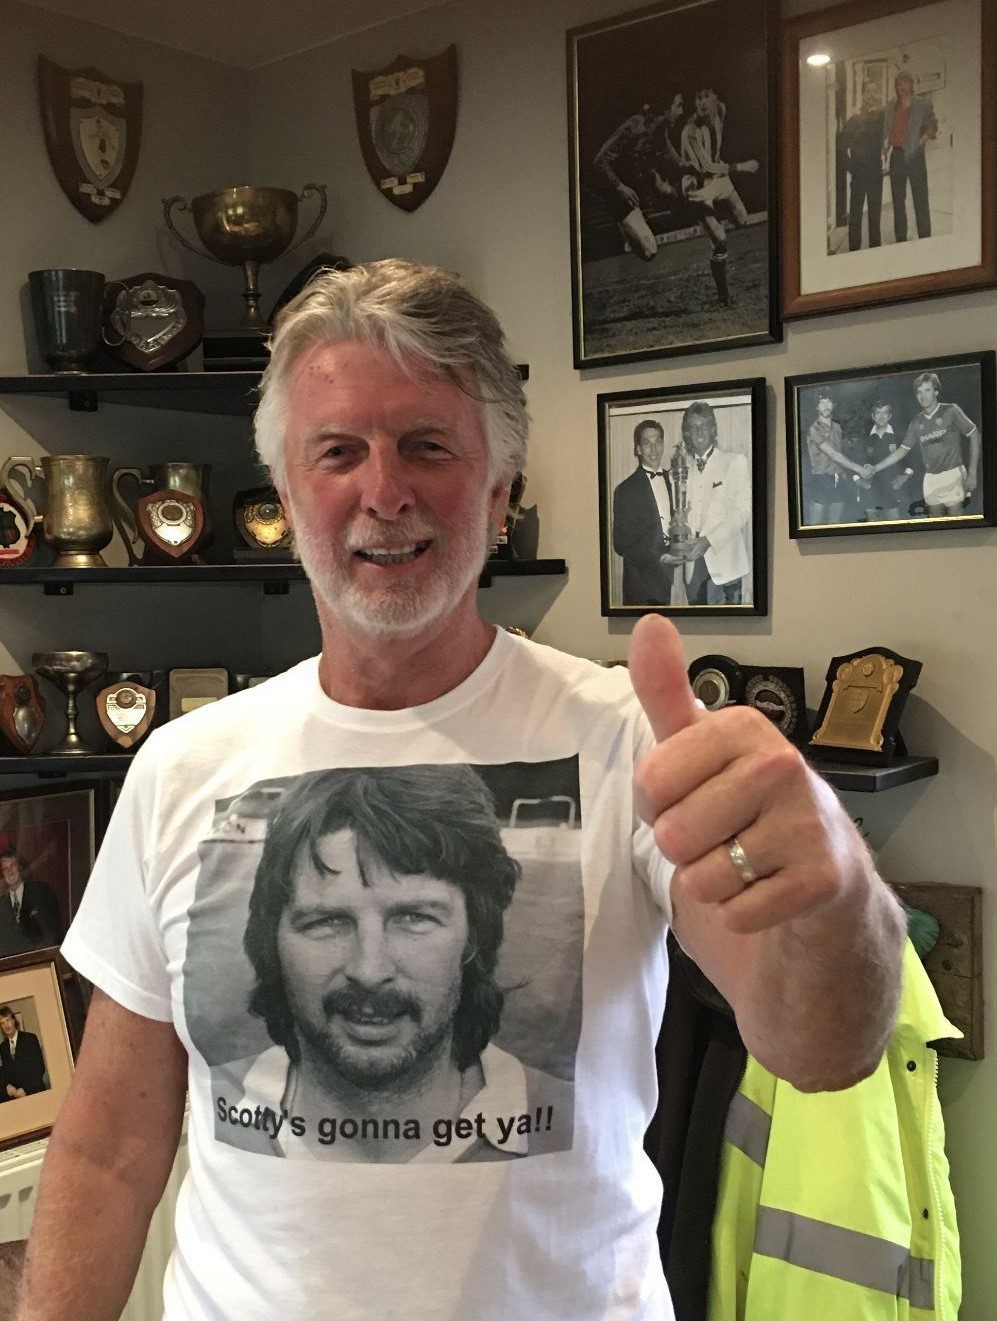 Bob Scott wearing the Scottys gonna get ya!! t-shirt.